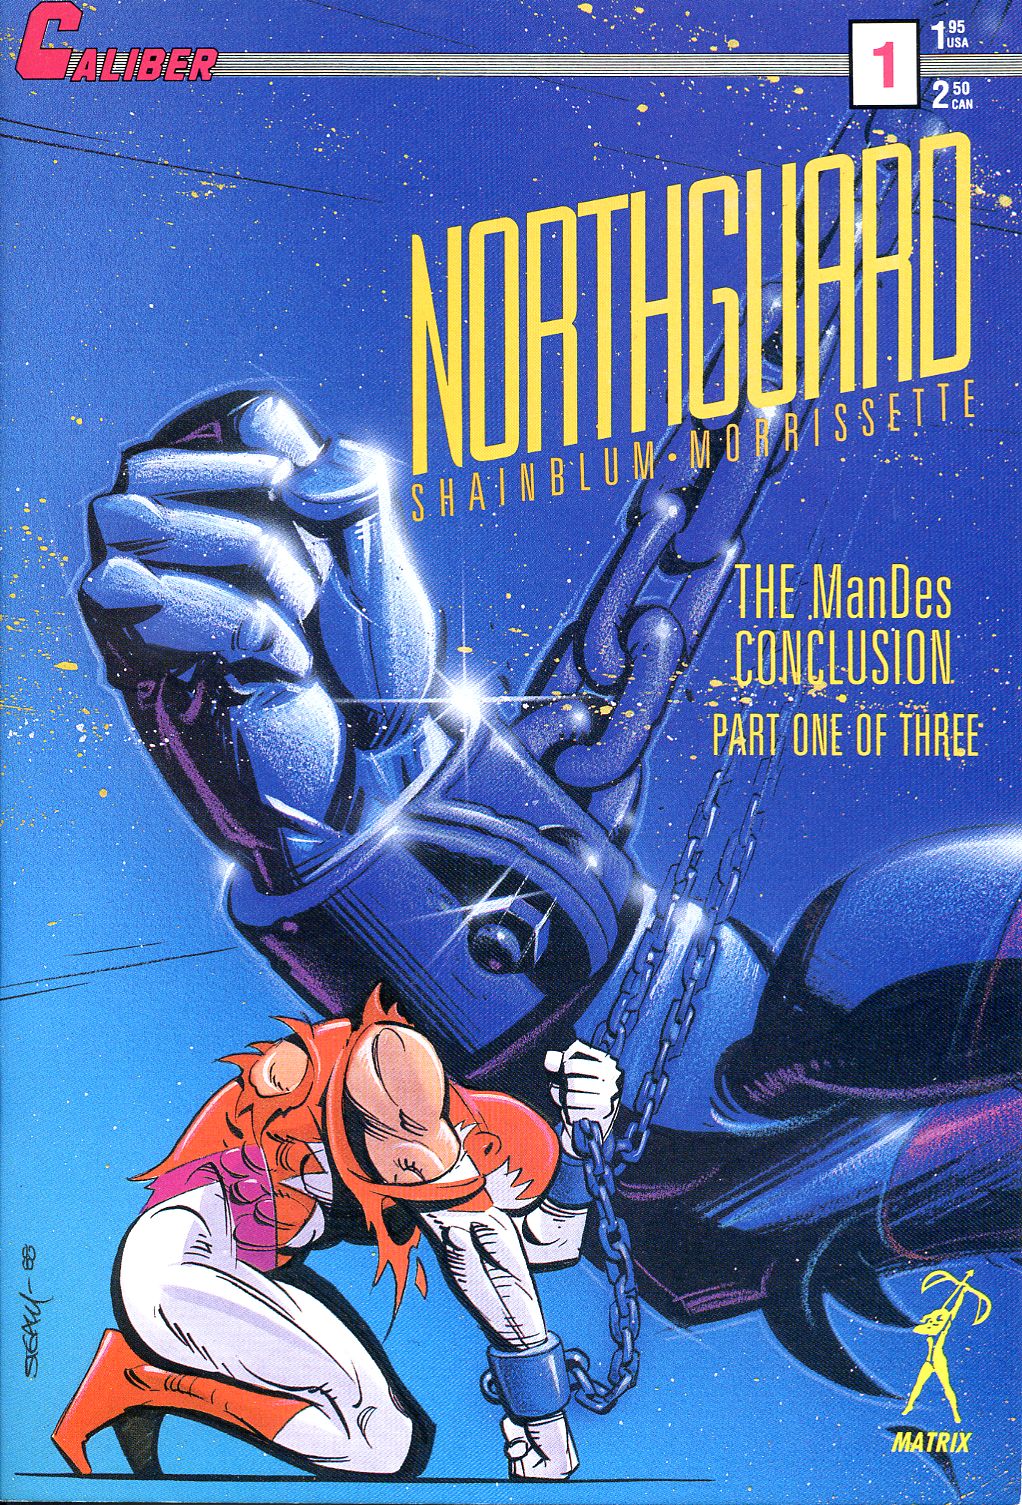 Mark Shainblum & Gabriel Morrissette - Northguard series